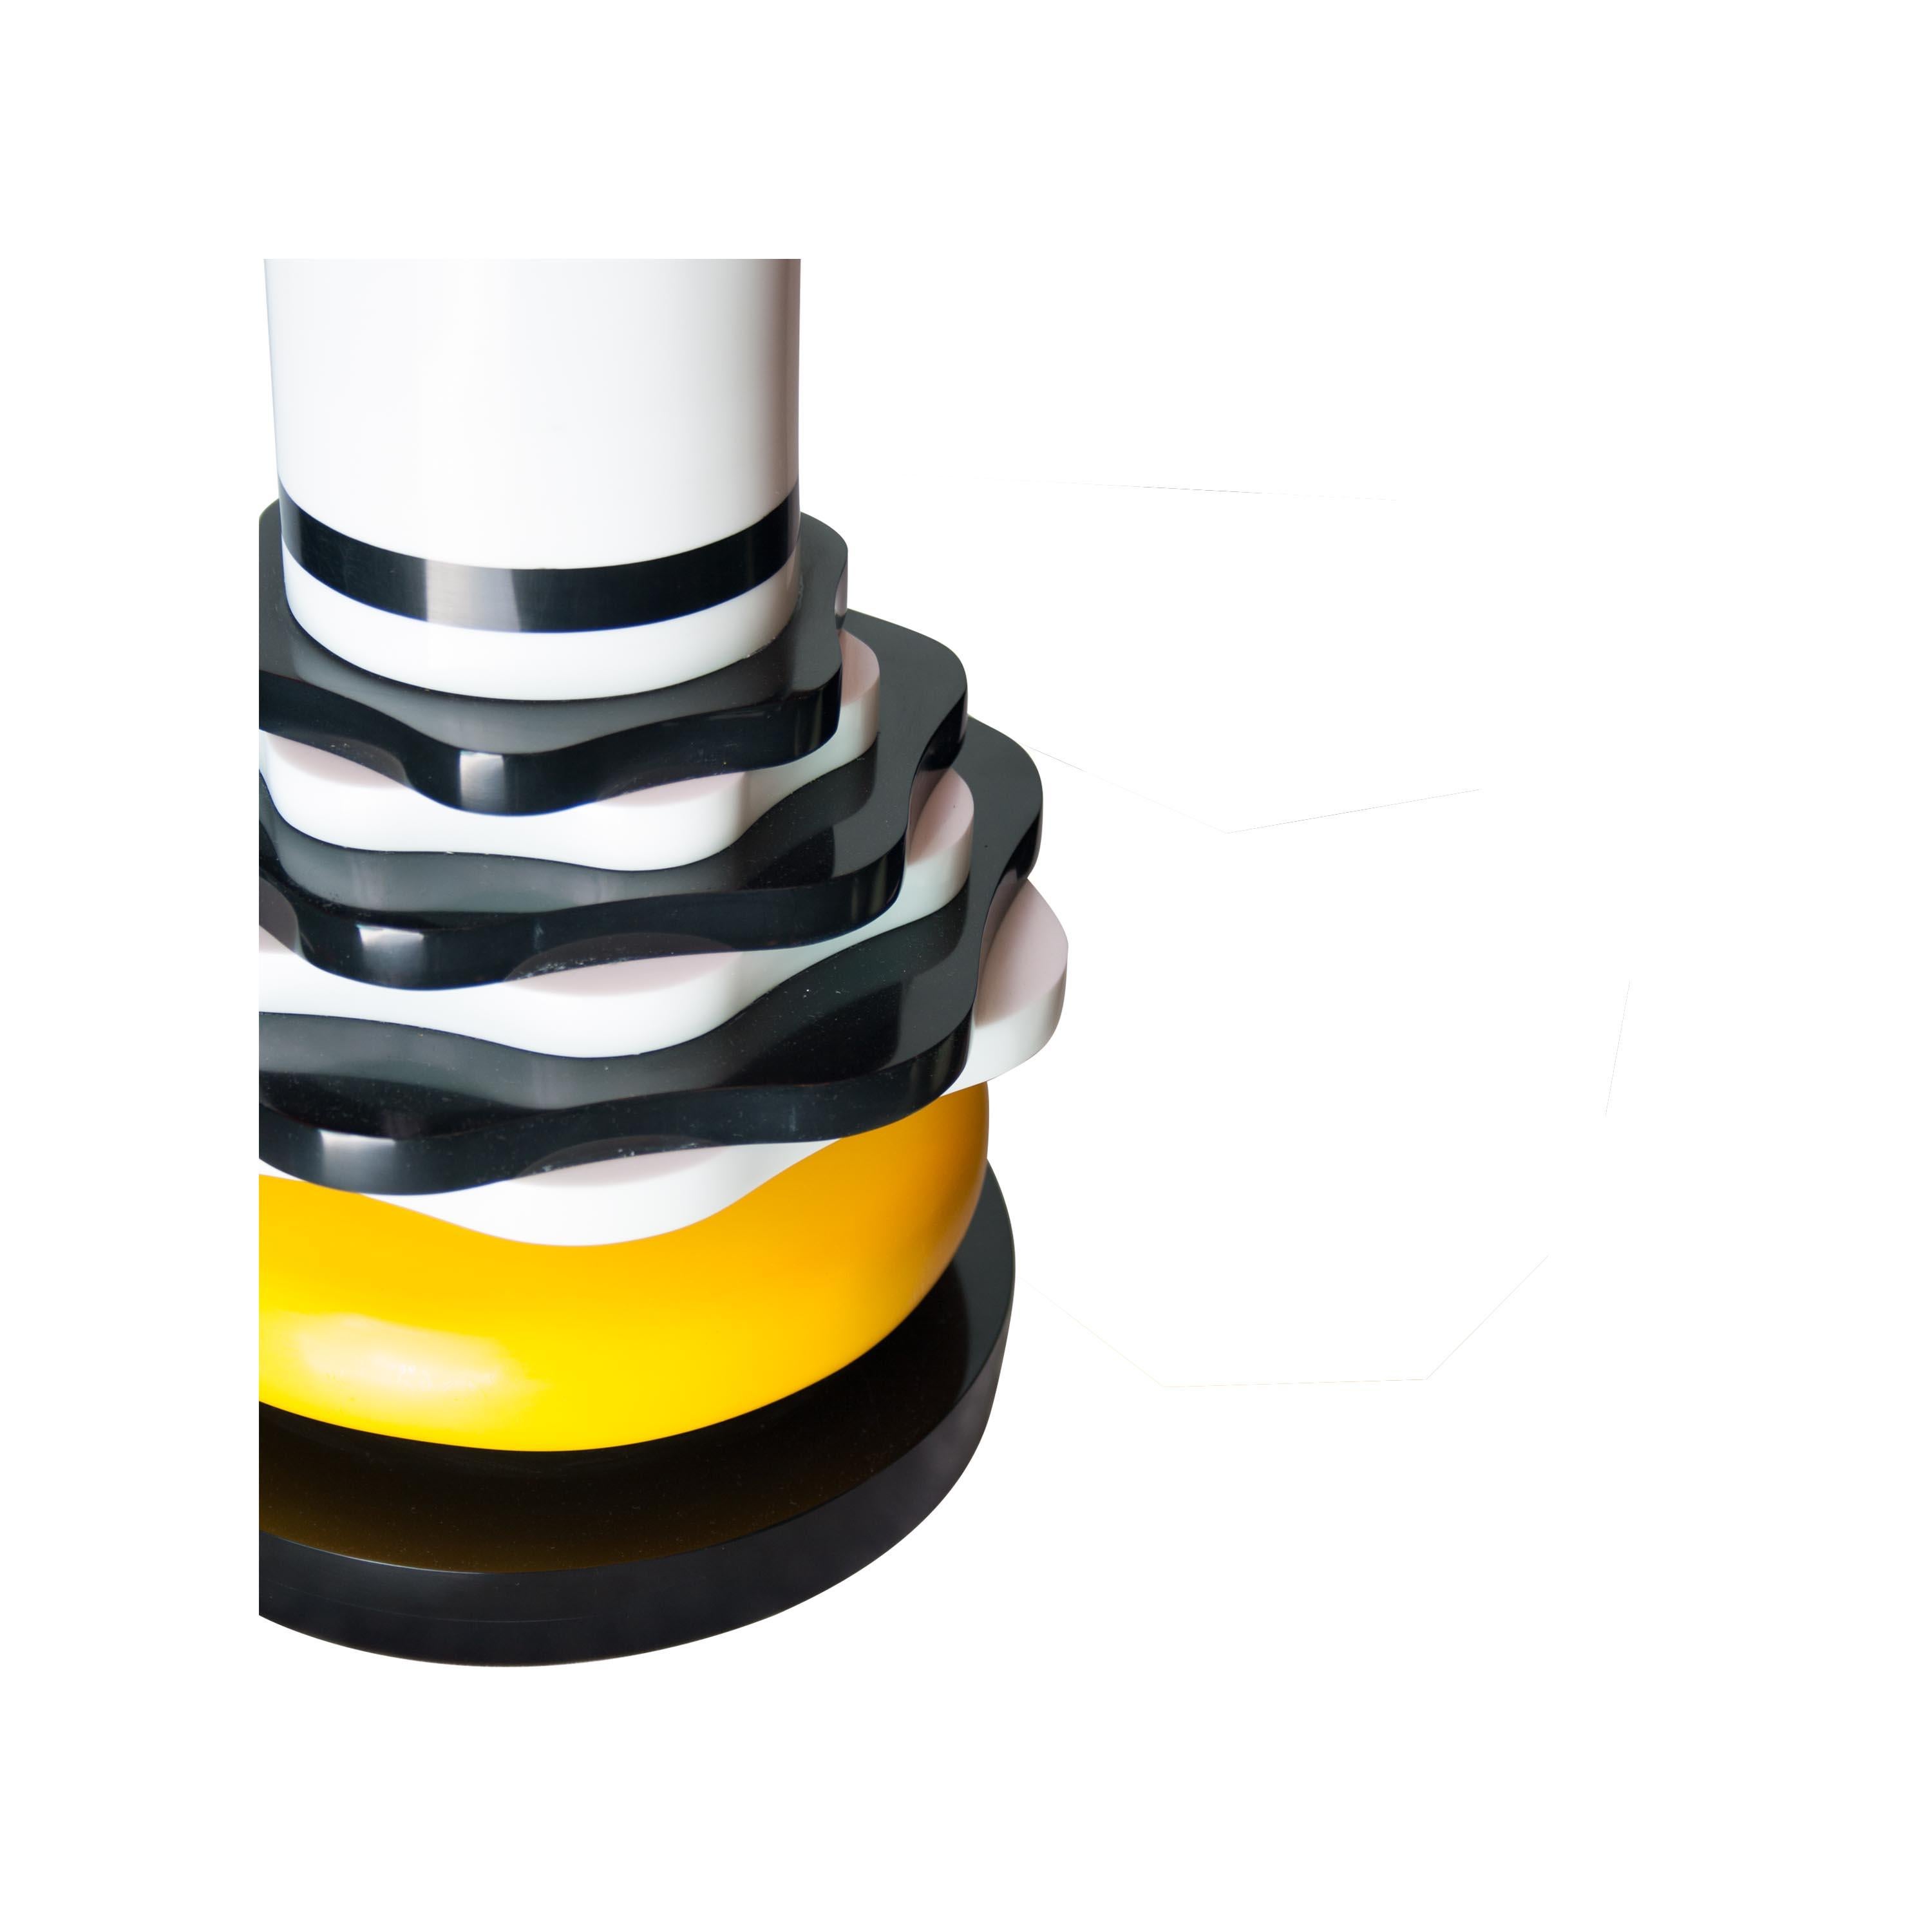 Spanish Paolo Setti Fipro Studio Memphis Style Corian Multi-Color Vase, Spain, 2019